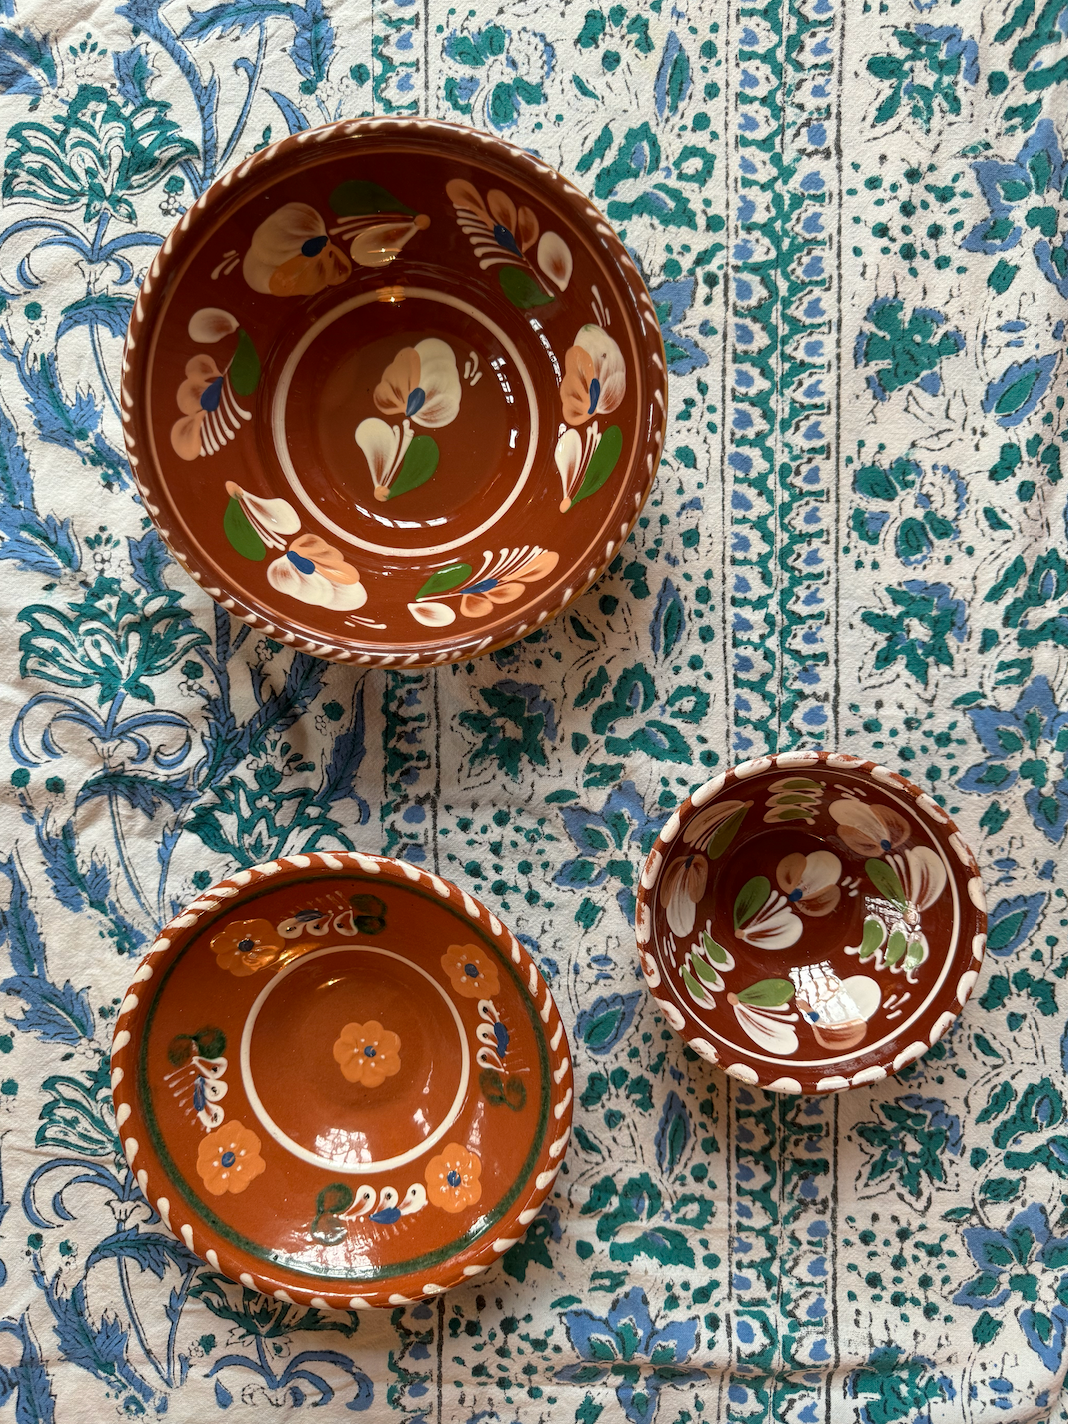 Set of 3 Rare & Antique Pair of Decorative Hungarian Wall Plates, Jemima